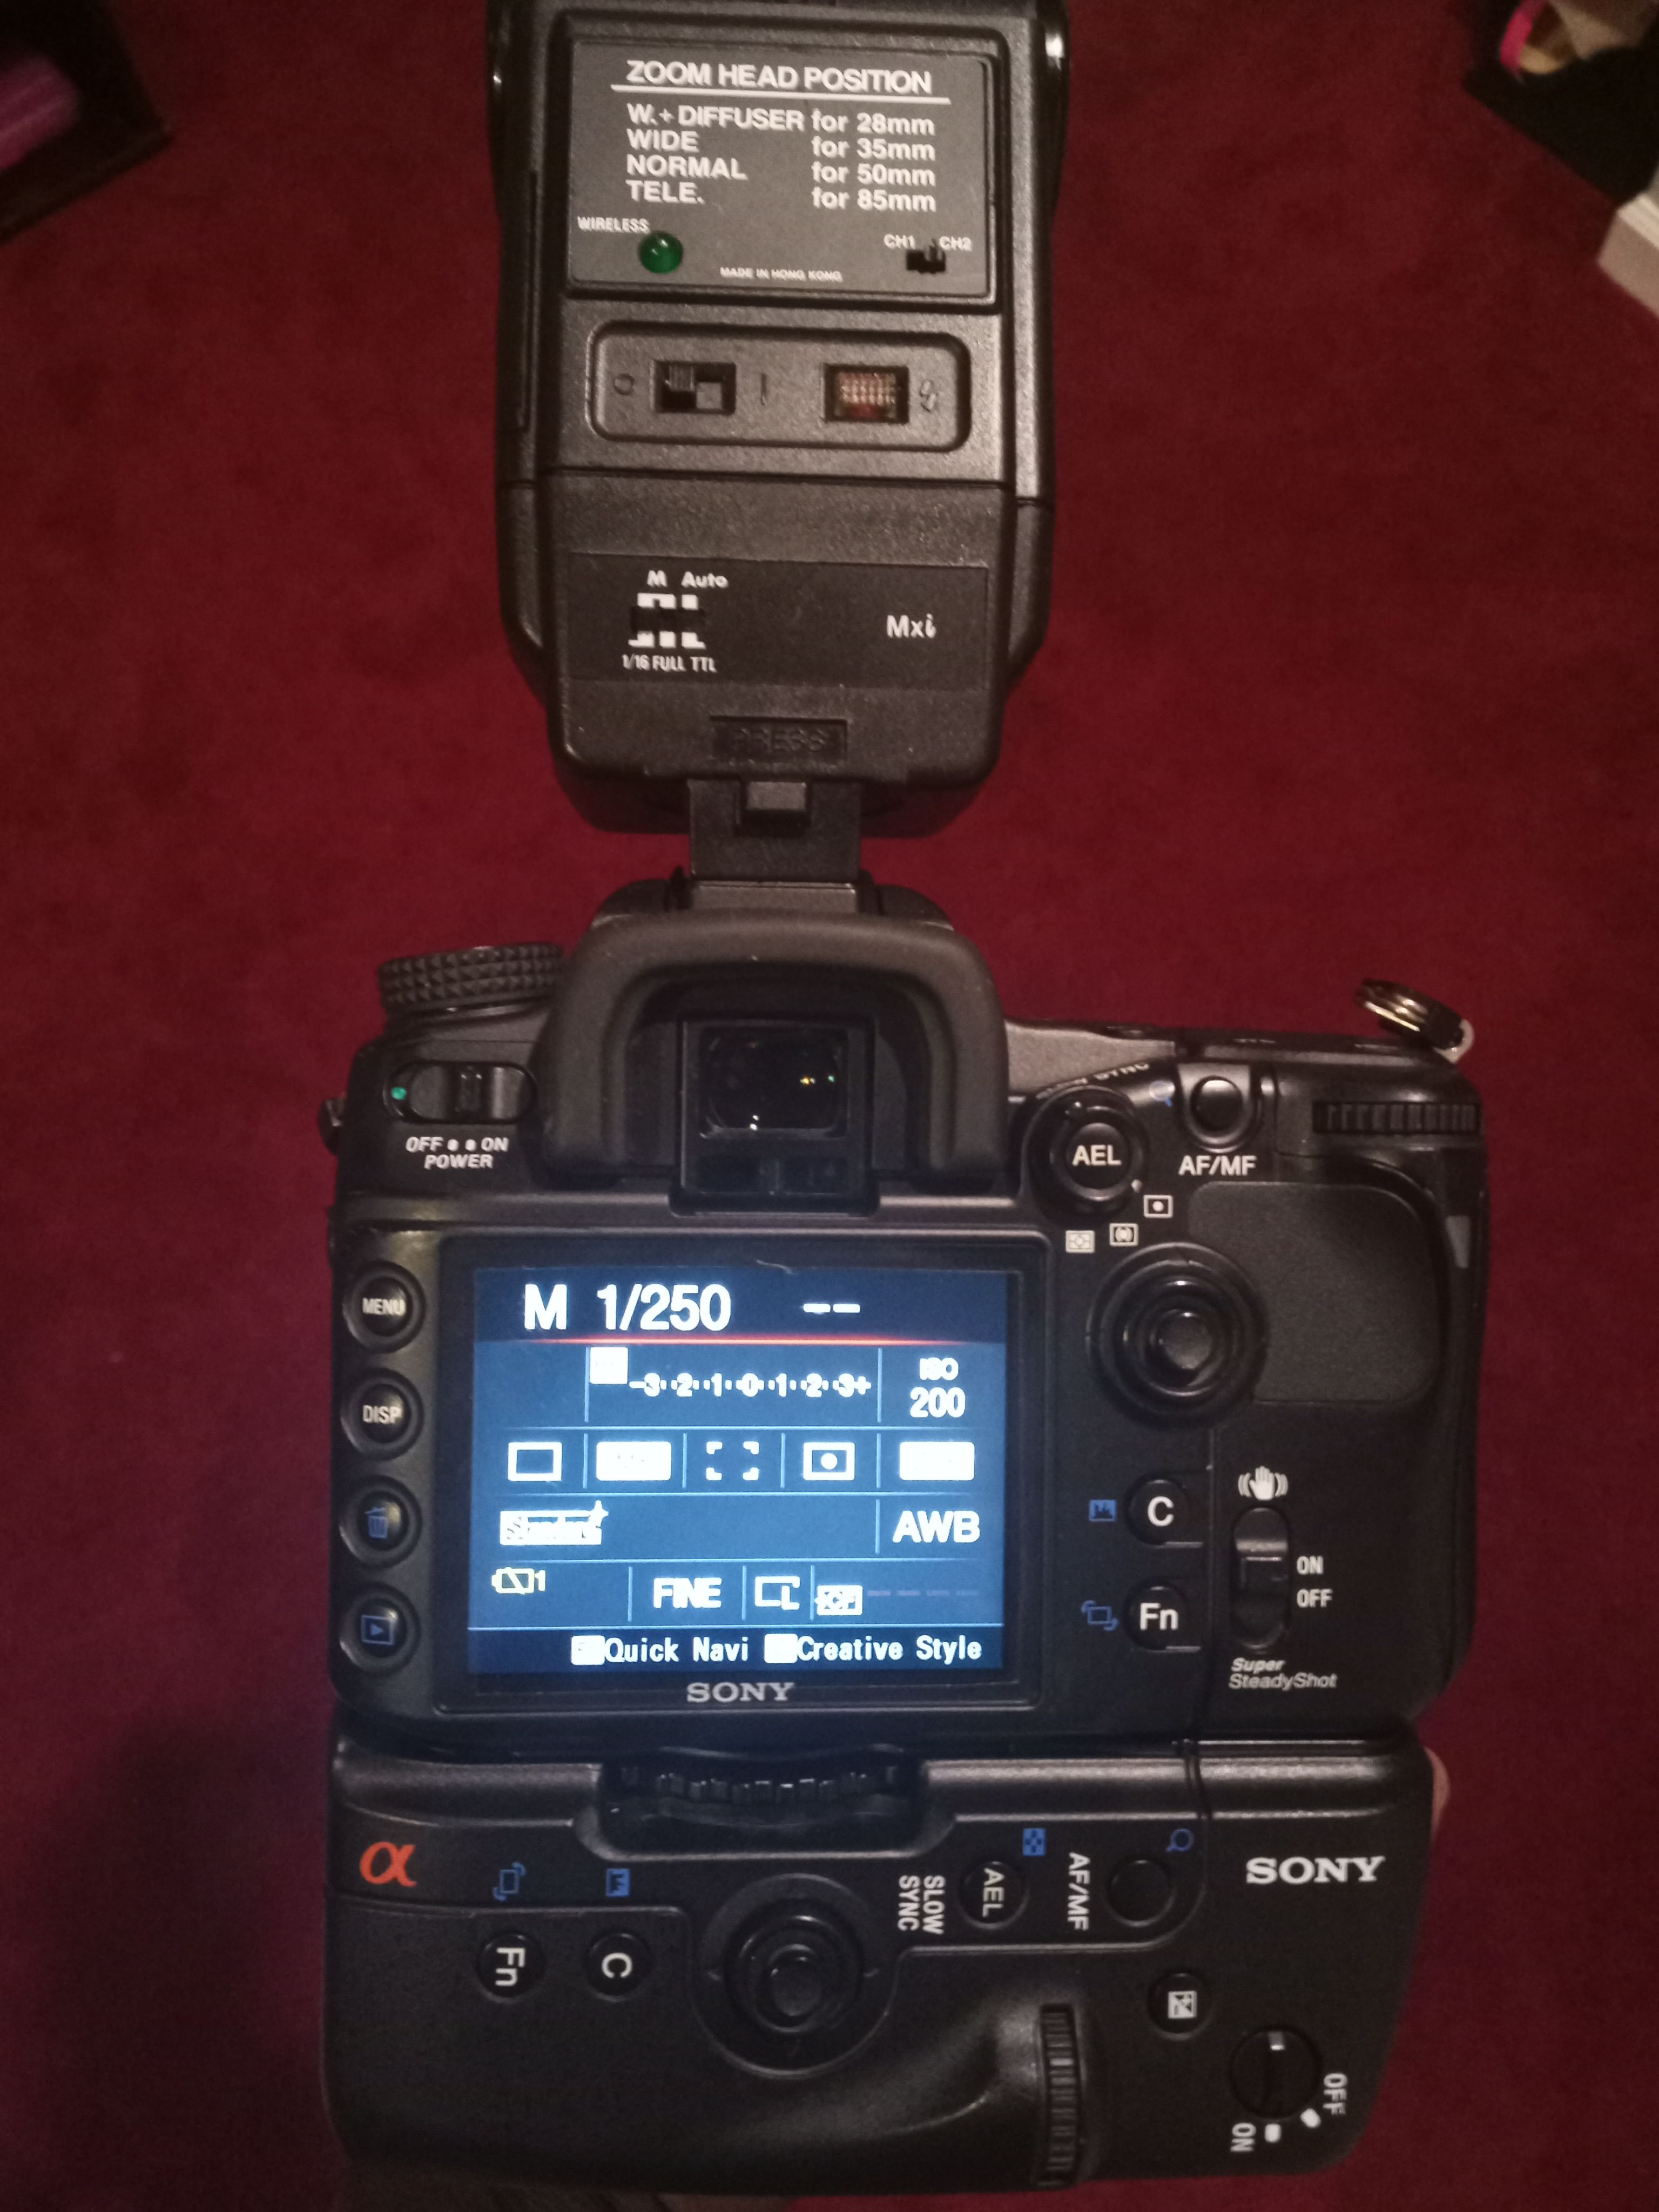 Sony Alpha DSLR-A700 Digital SLR Camera - Black